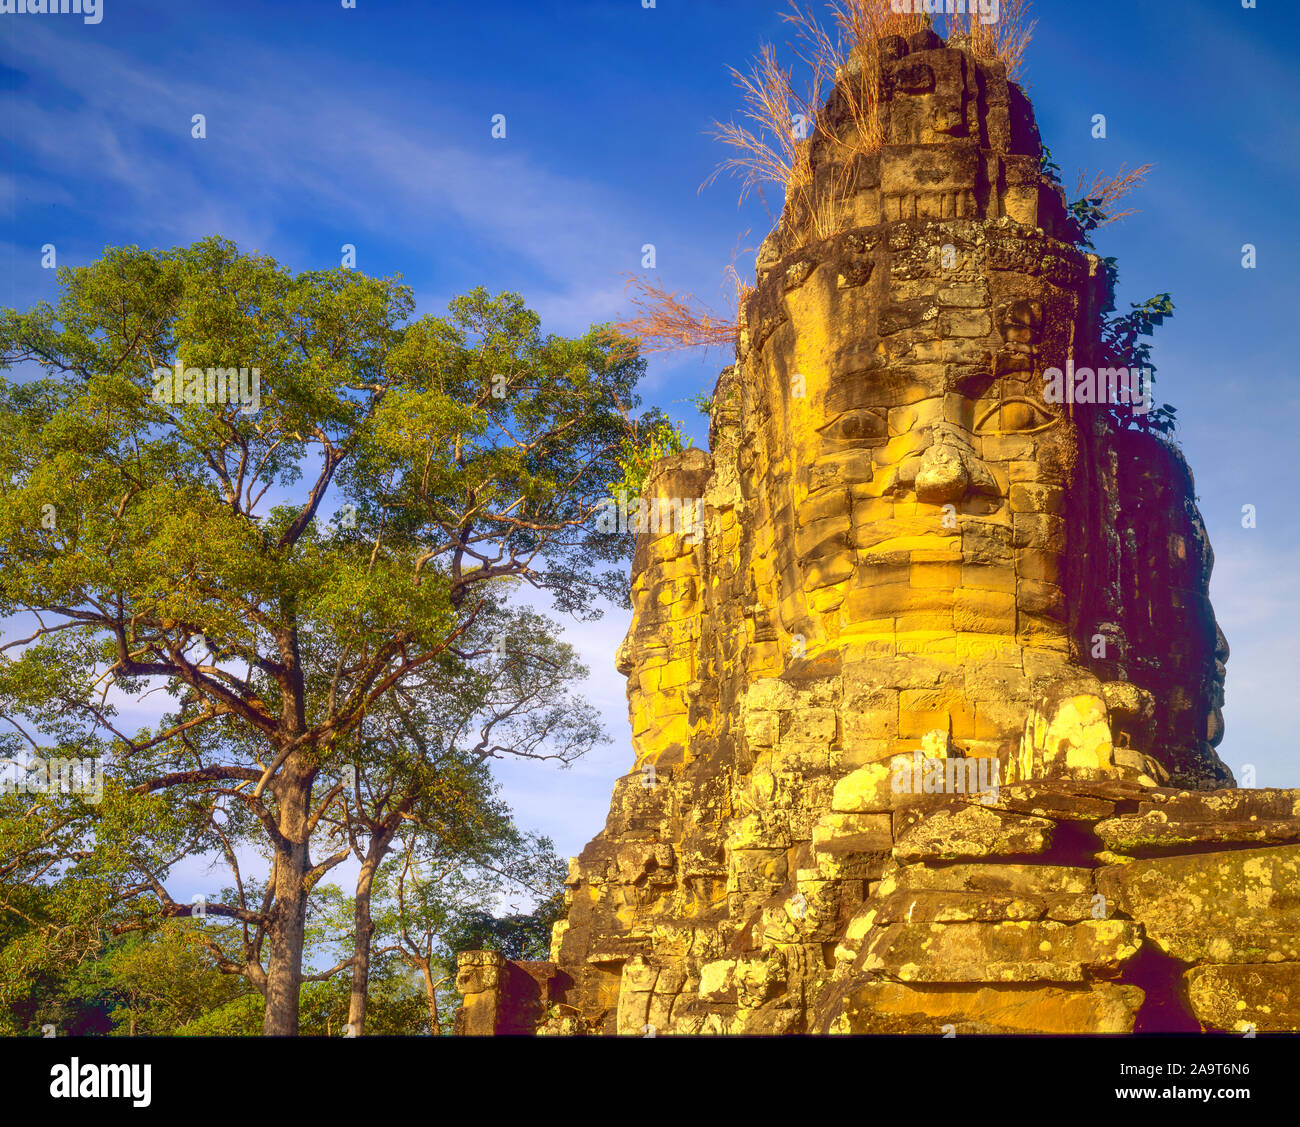 Bayon Temple, Angkor Watt Archeological Park, Cambodia, City fof Angkor Thom, Built 1100-1200 AD Khymer Culture ruins in Se Asia jungle Stock Photo